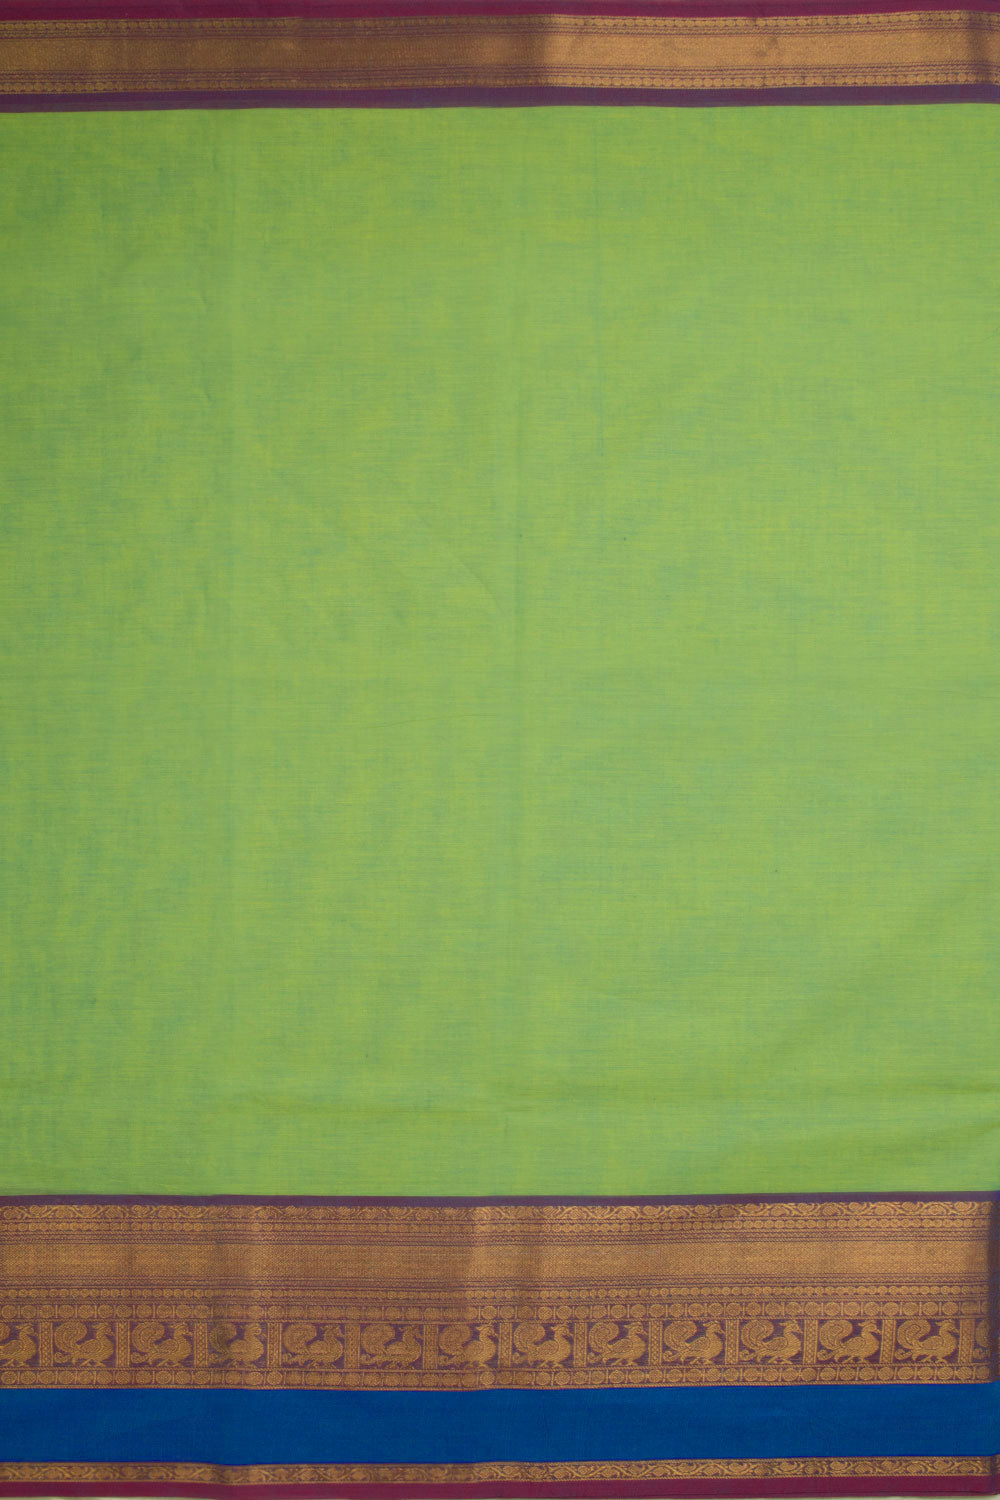 Dual Tone Green Handwoven Kanchi Cotton Saree 10069367 - Avishya